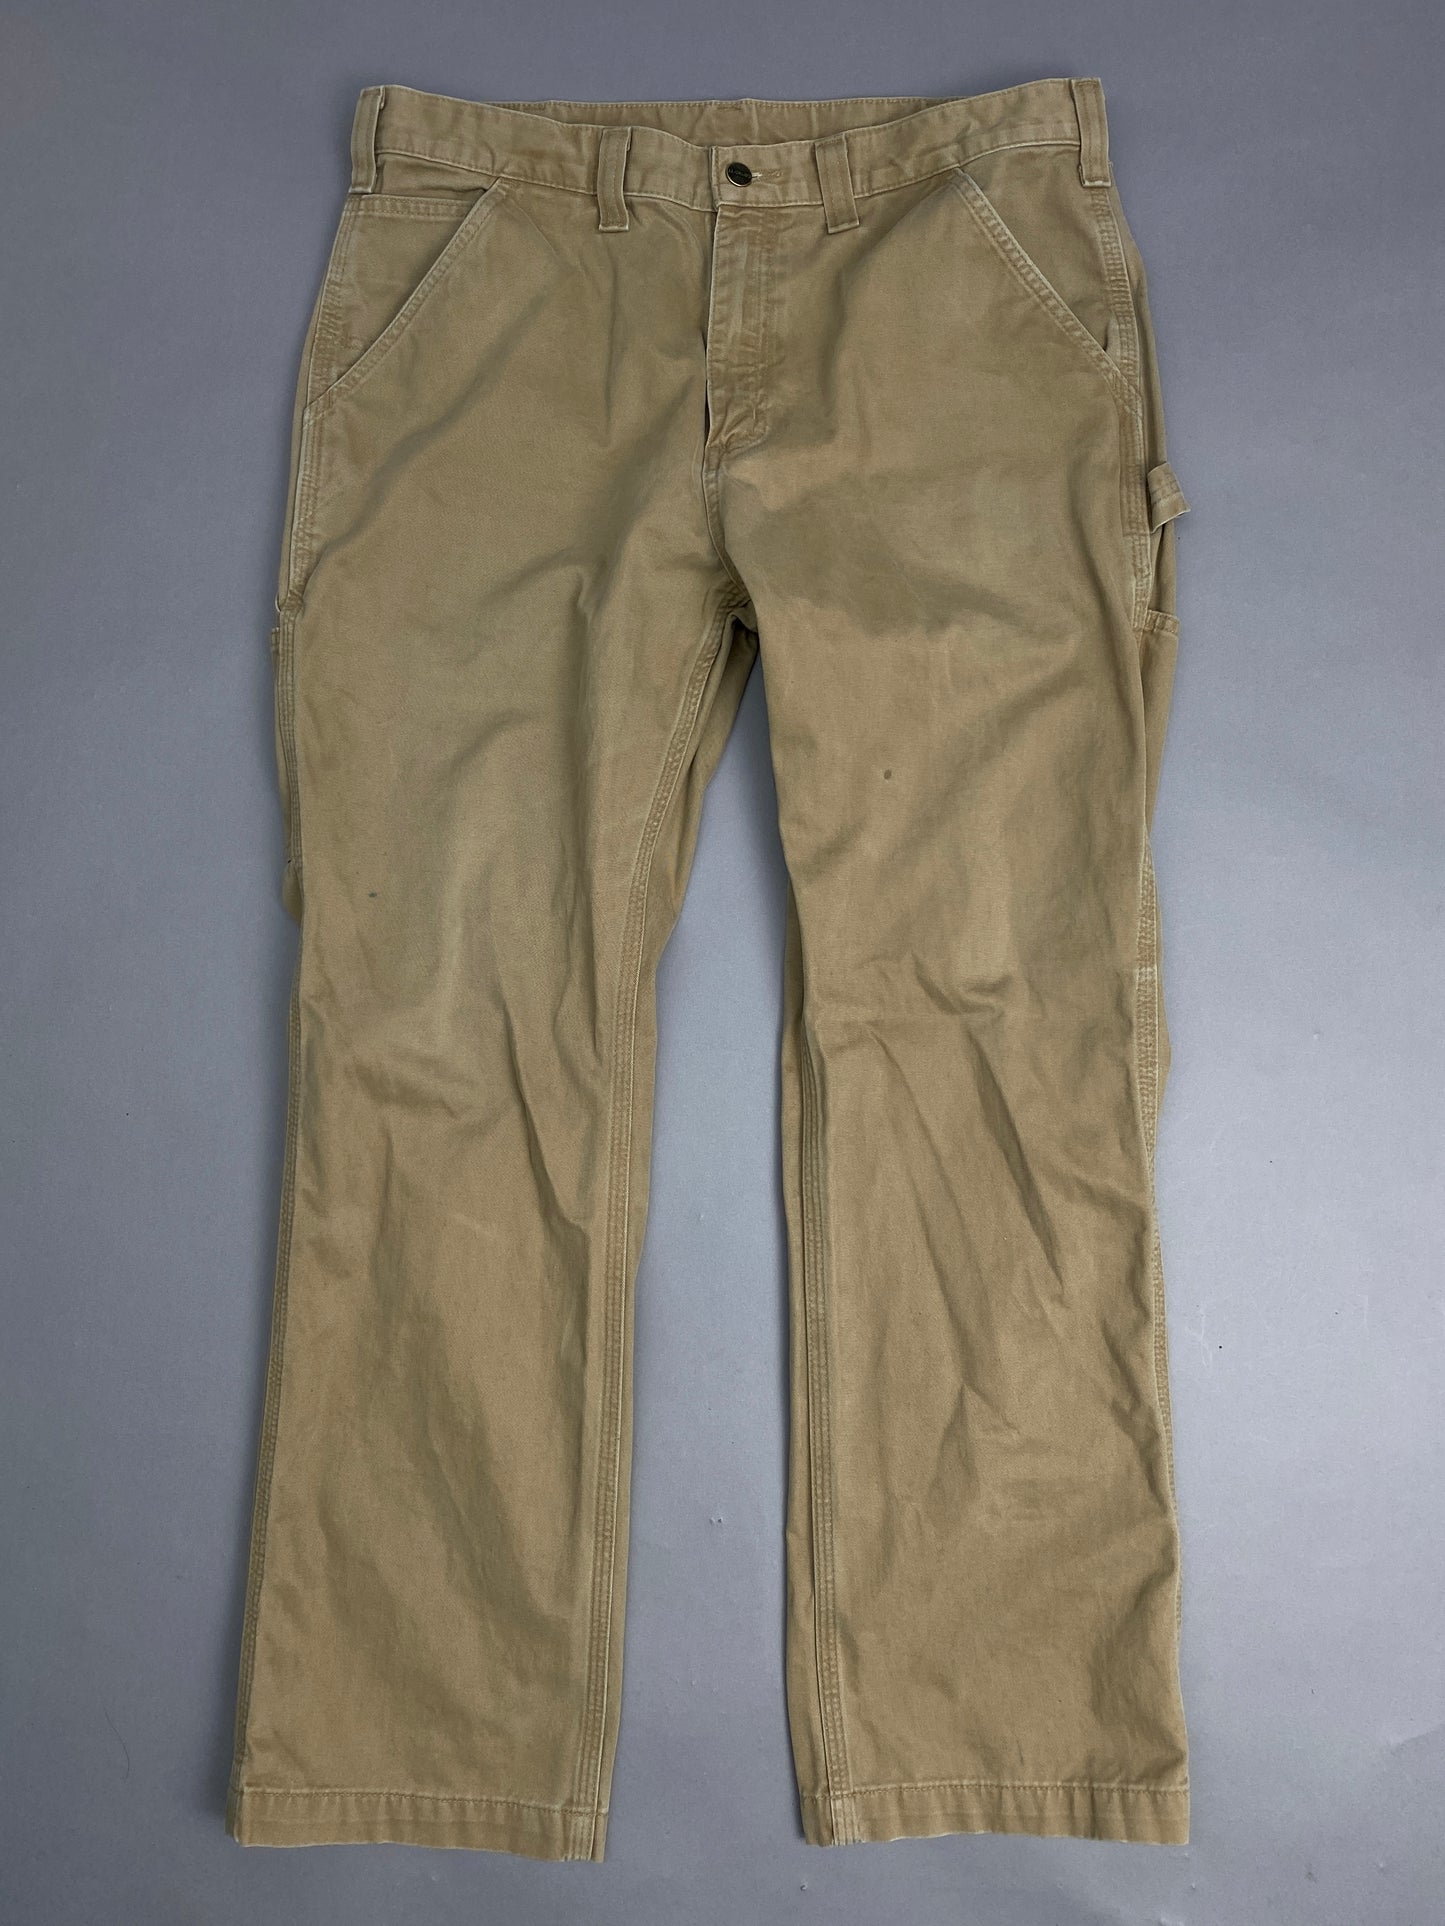 Carhartt Carpenter Pants - 36 x 30